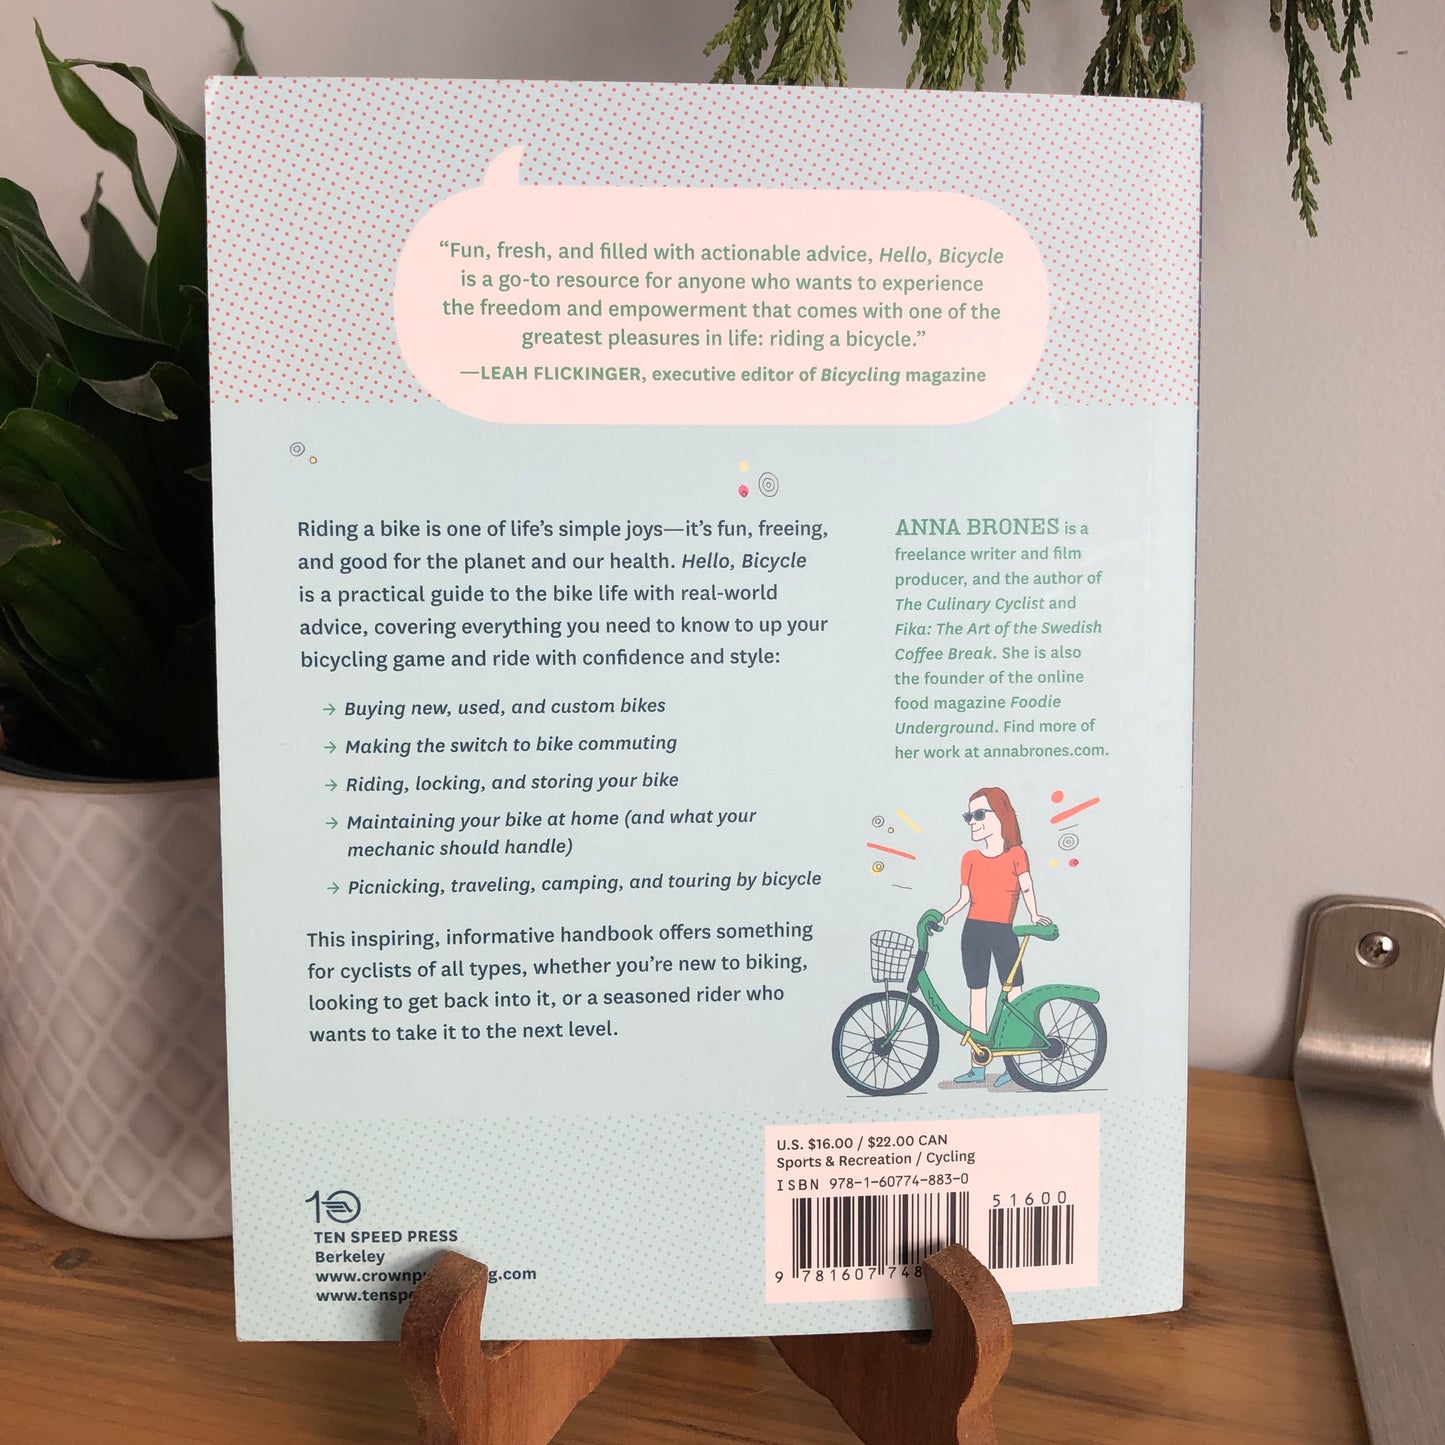 Book: Hello Bicycle (Anna Brones, Ten Speed Press)